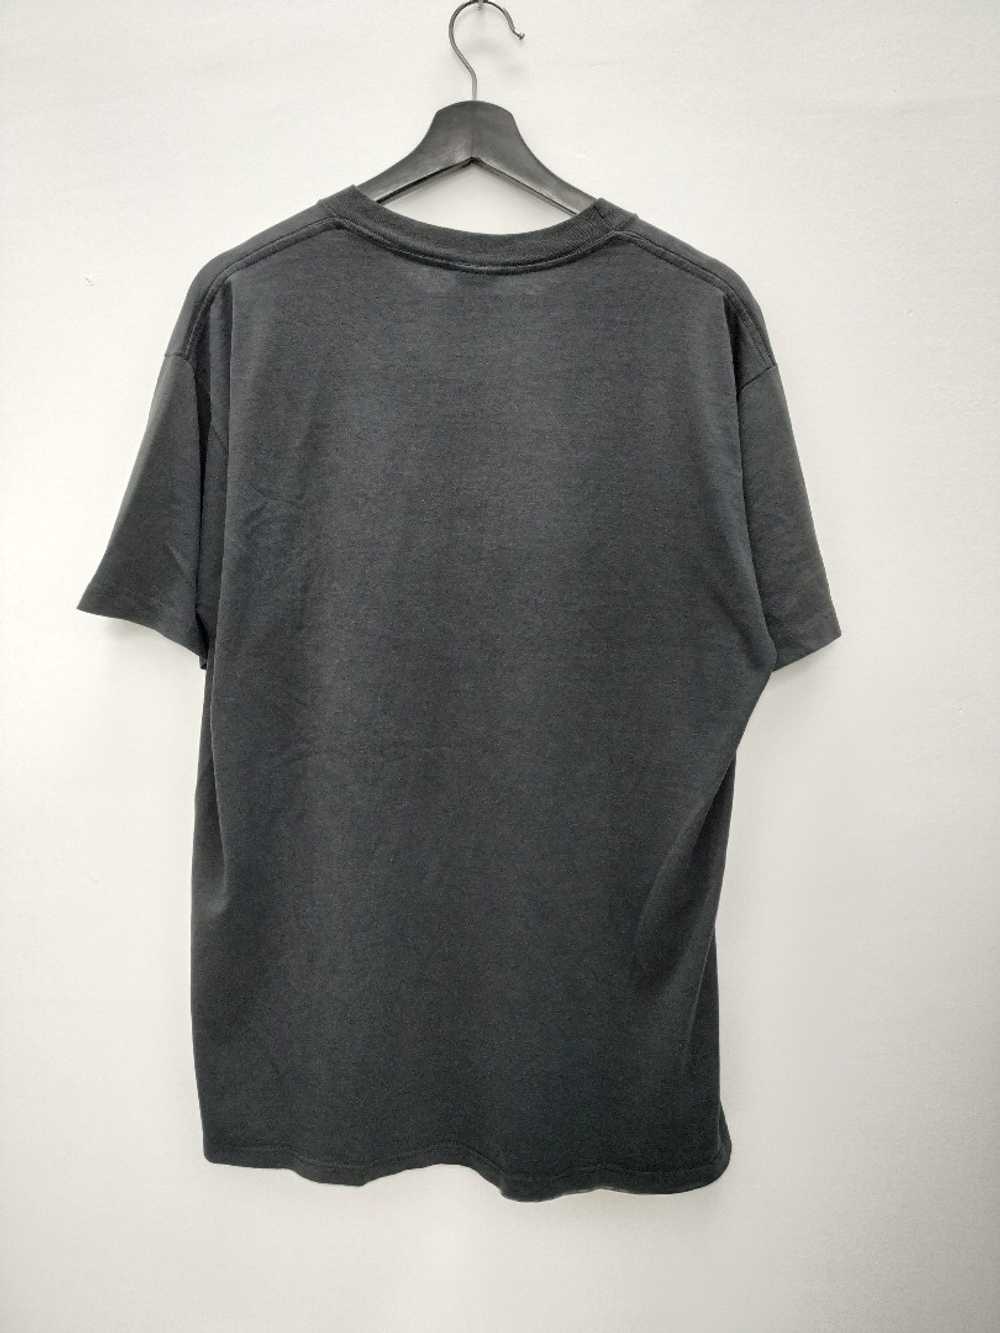 Oregon Hanes USA vintage Tshirt Size L - image 5